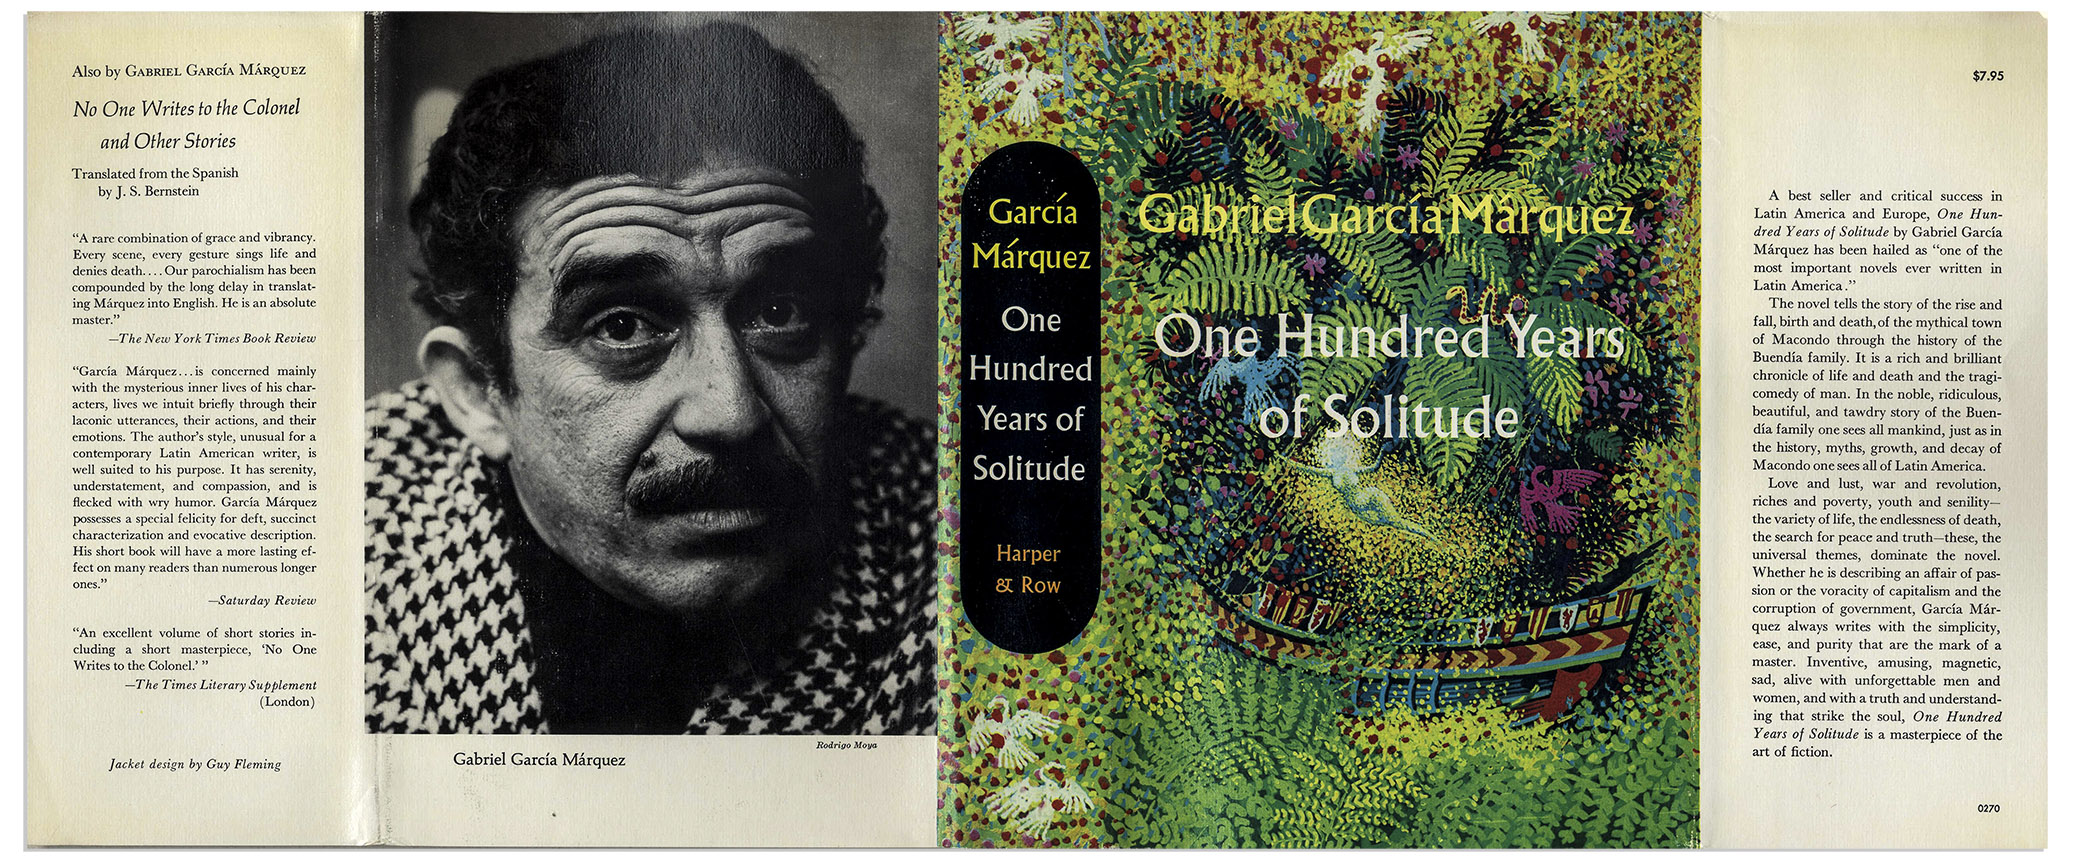 one hundred years of solitude novel by gabriel garcía márquez